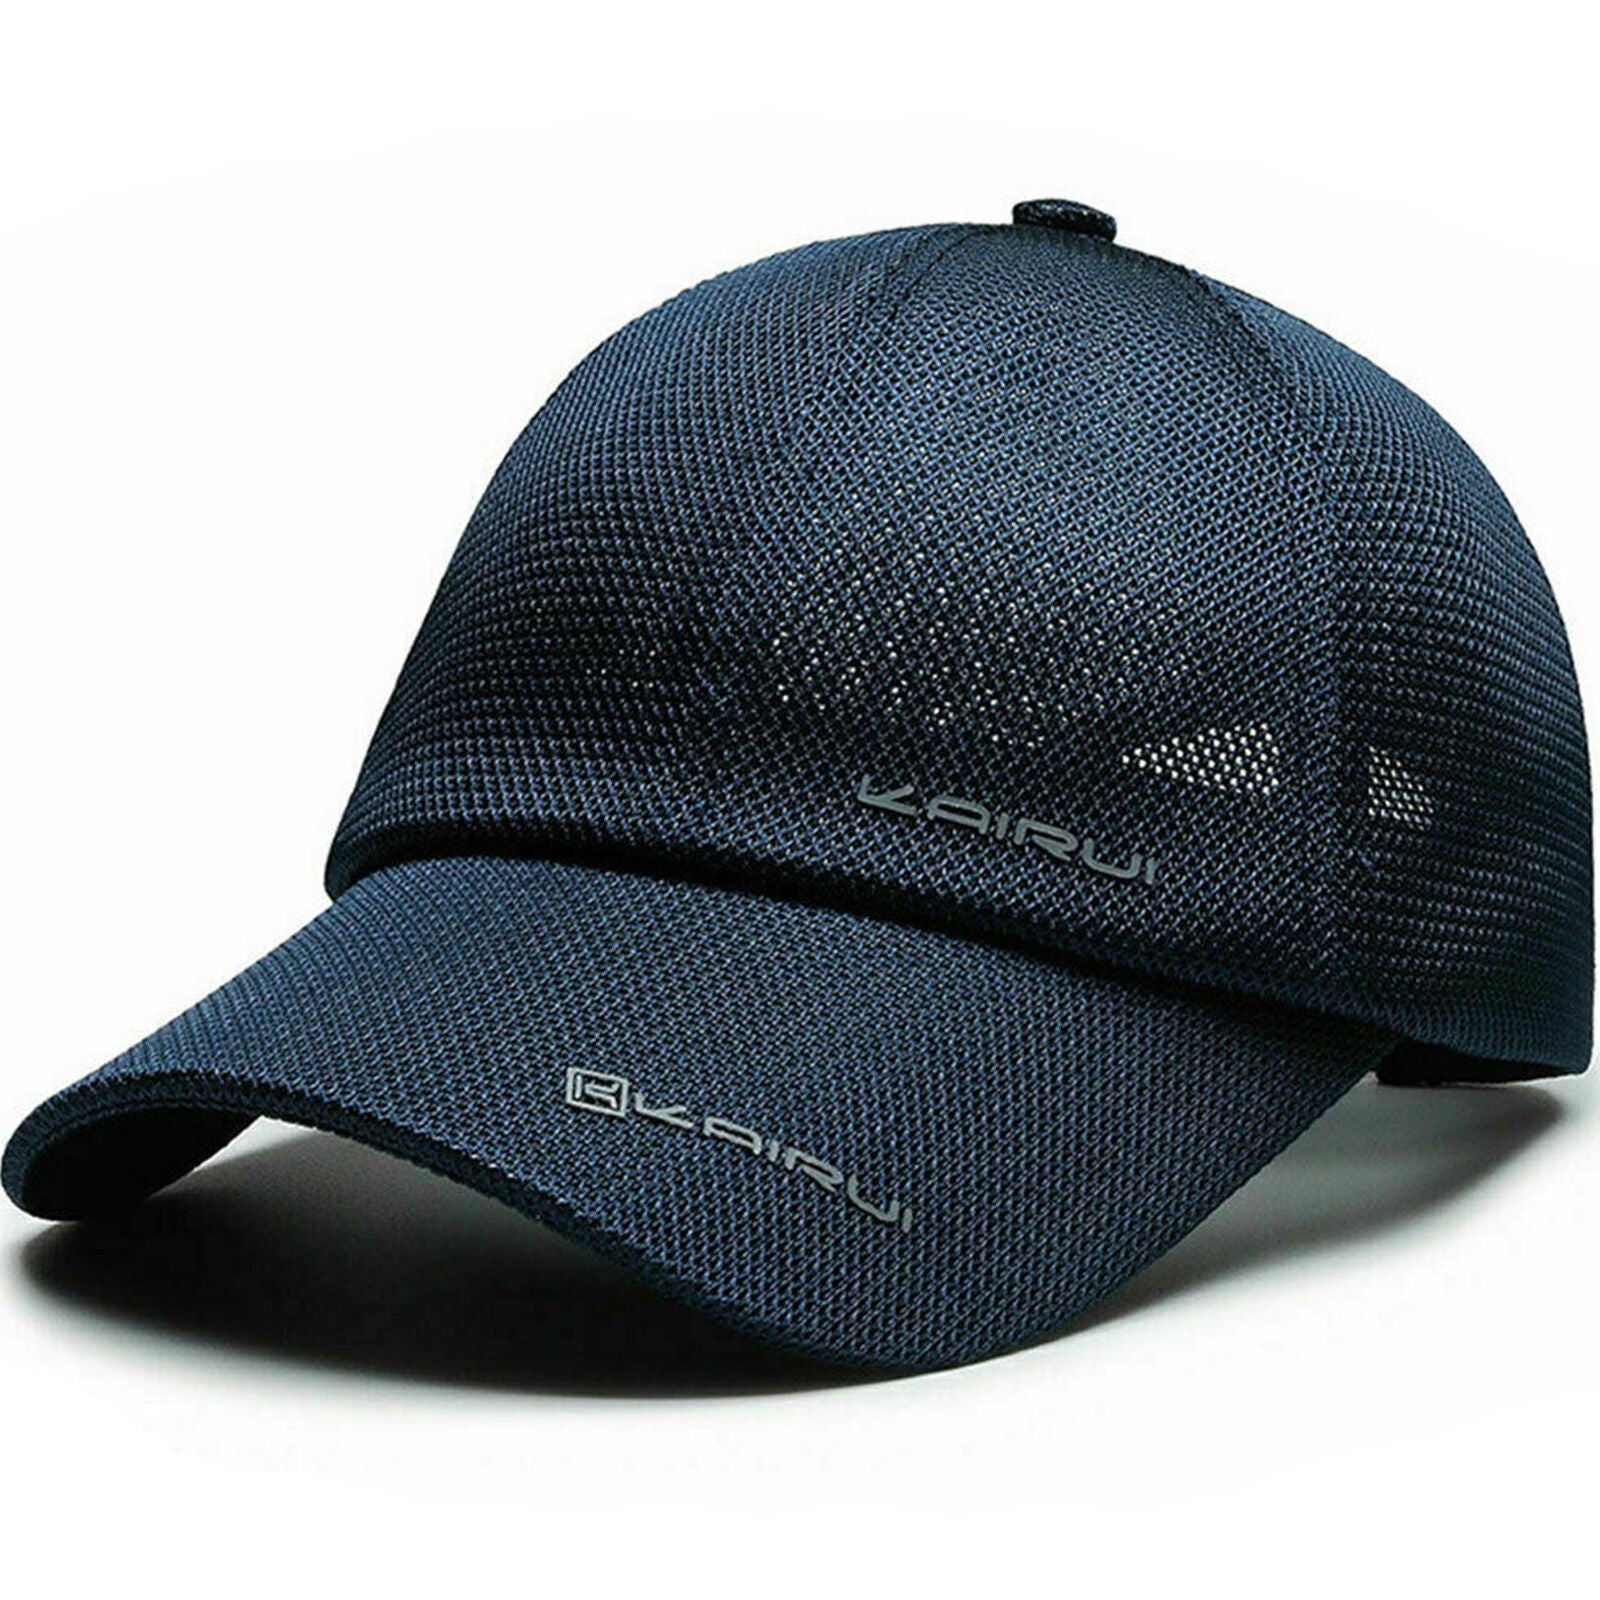 Men's Baseball Cap Golf Cap Breathable Sun Protection For Sports Travel